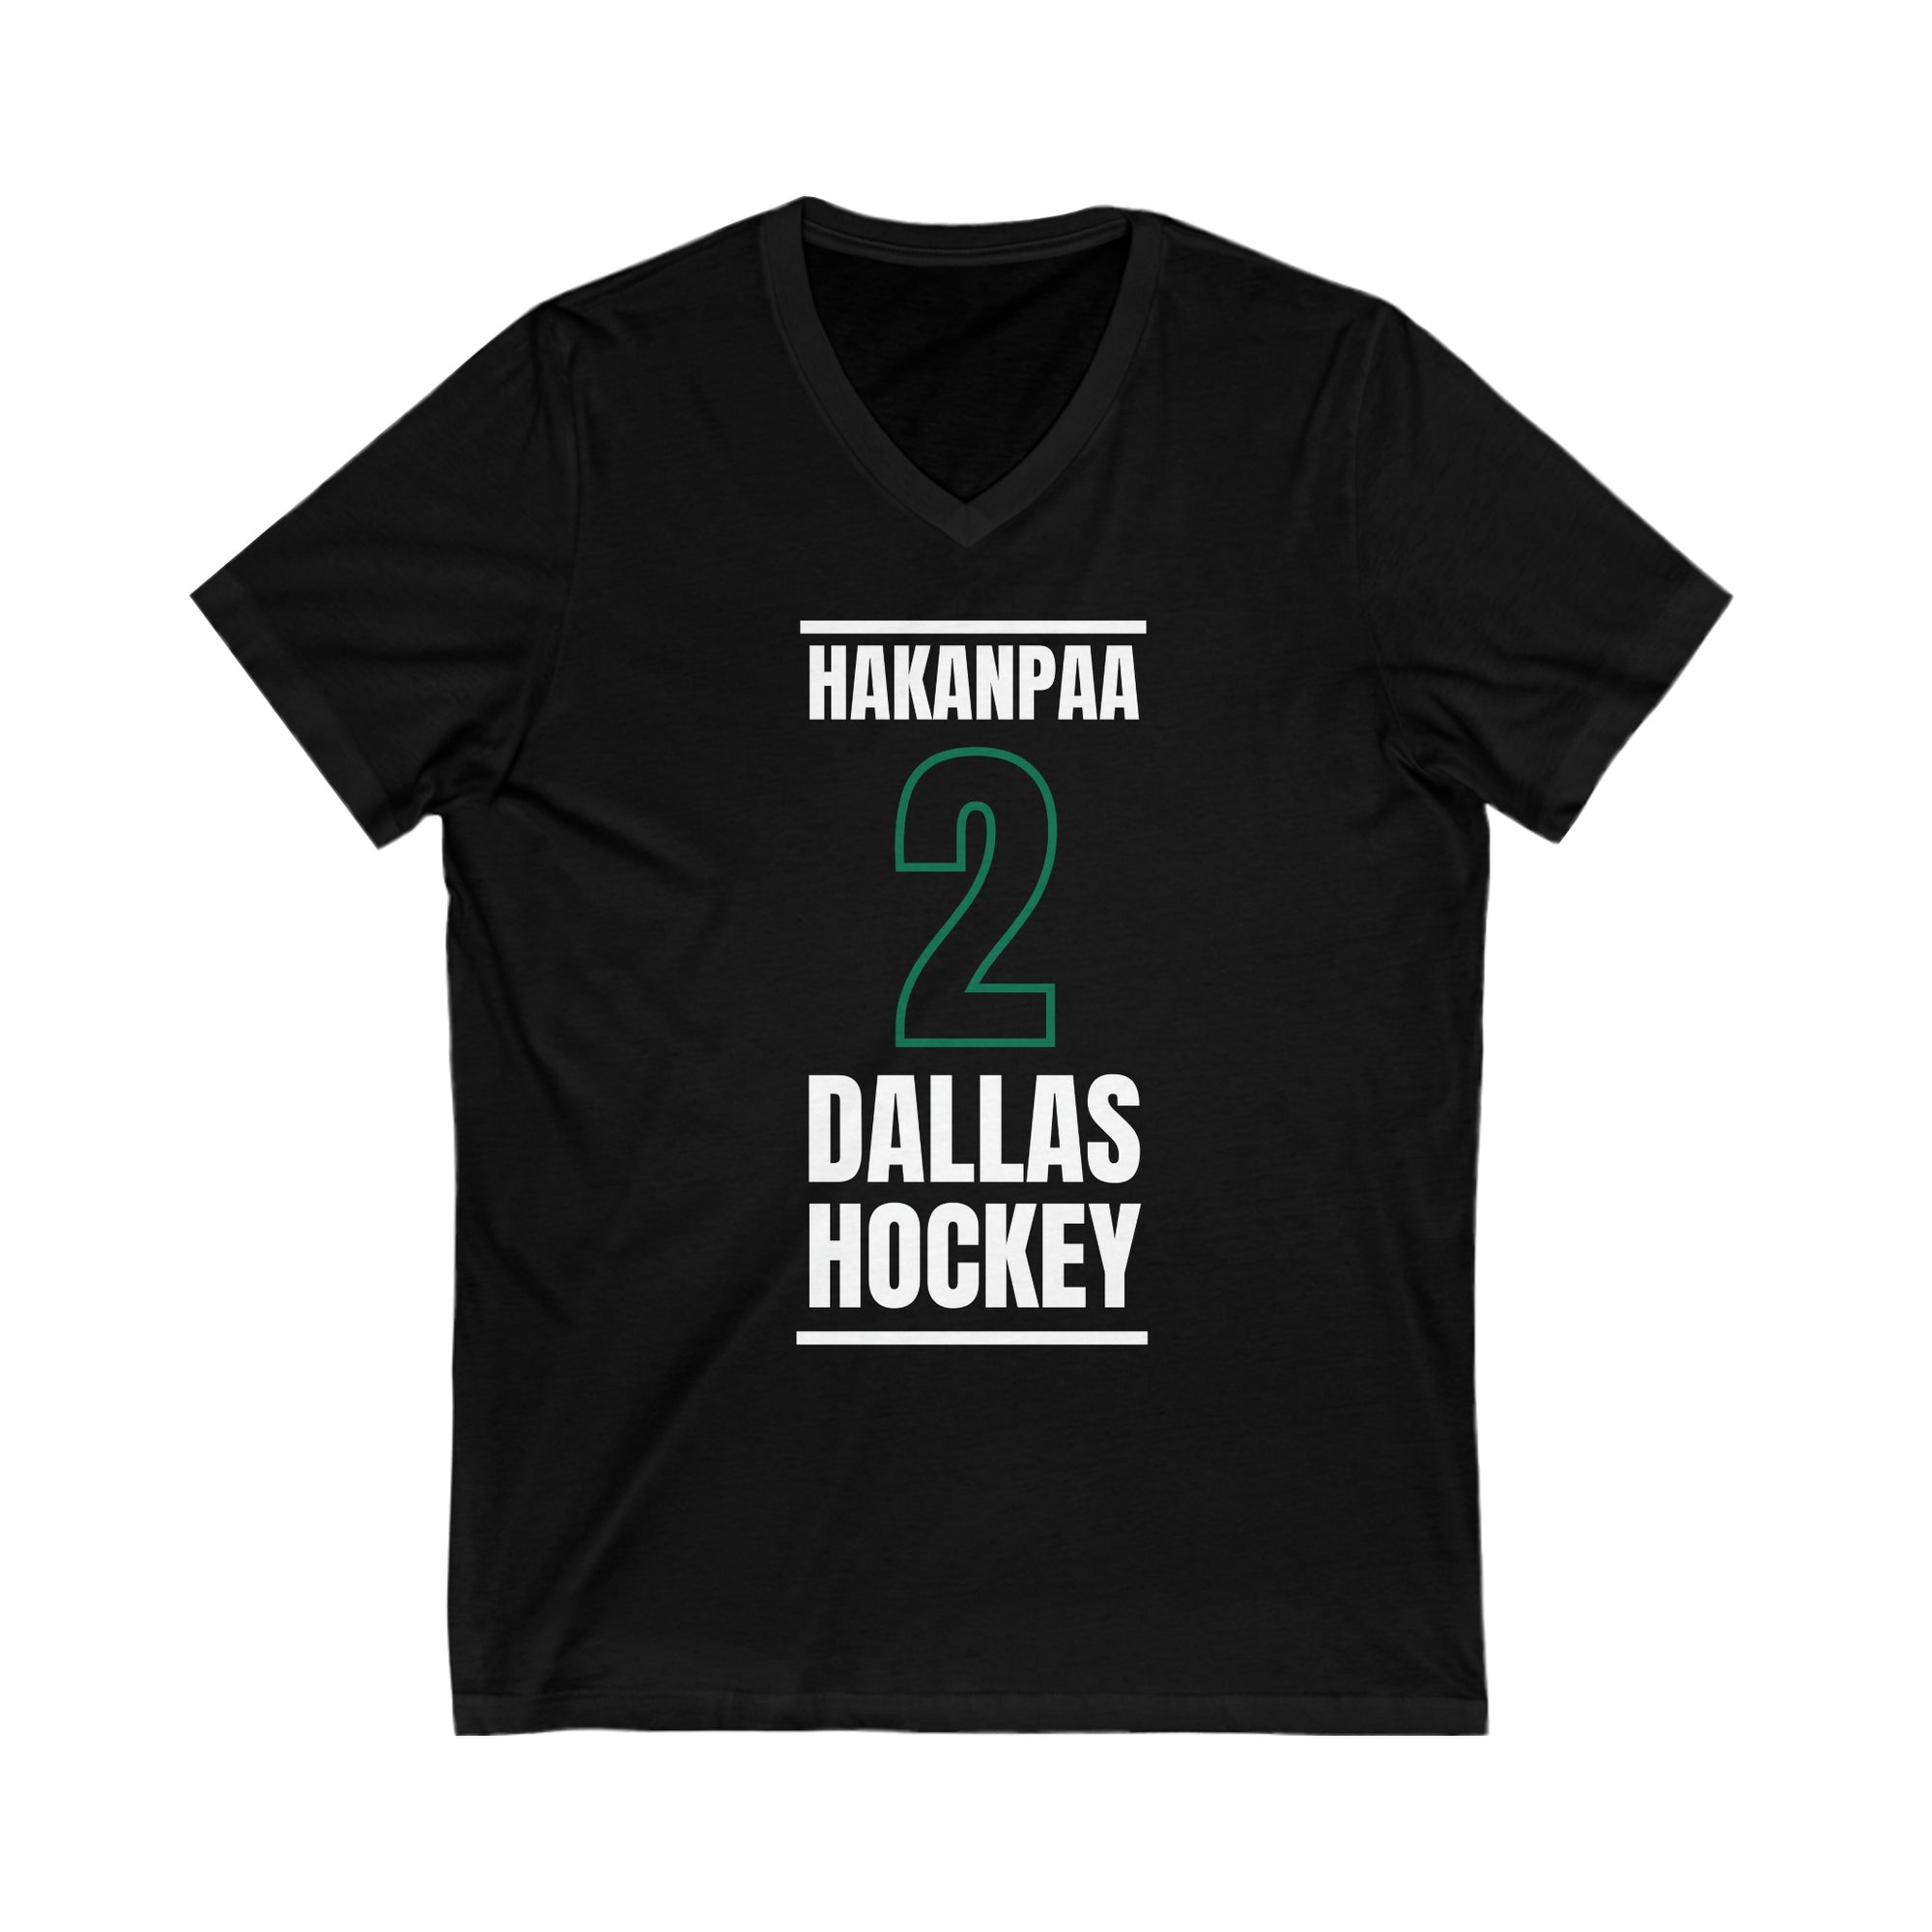 Hakanpaa 2 Dallas Hockey Black Vertical Design Unisex V-Neck Tee